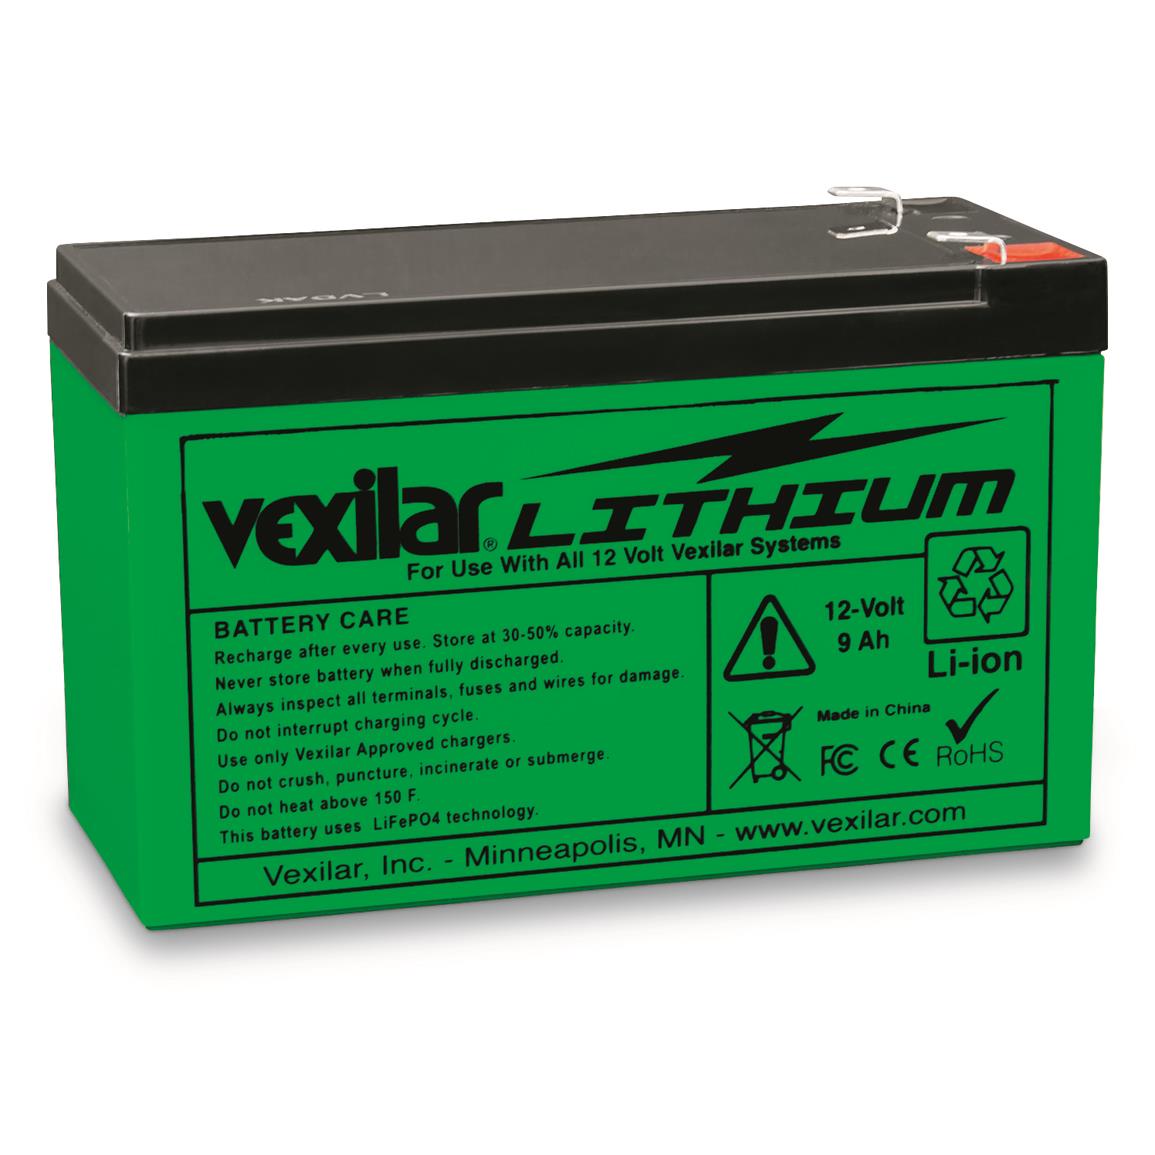 Vexilar 12 Volt, 9 Amp Lithium Battery